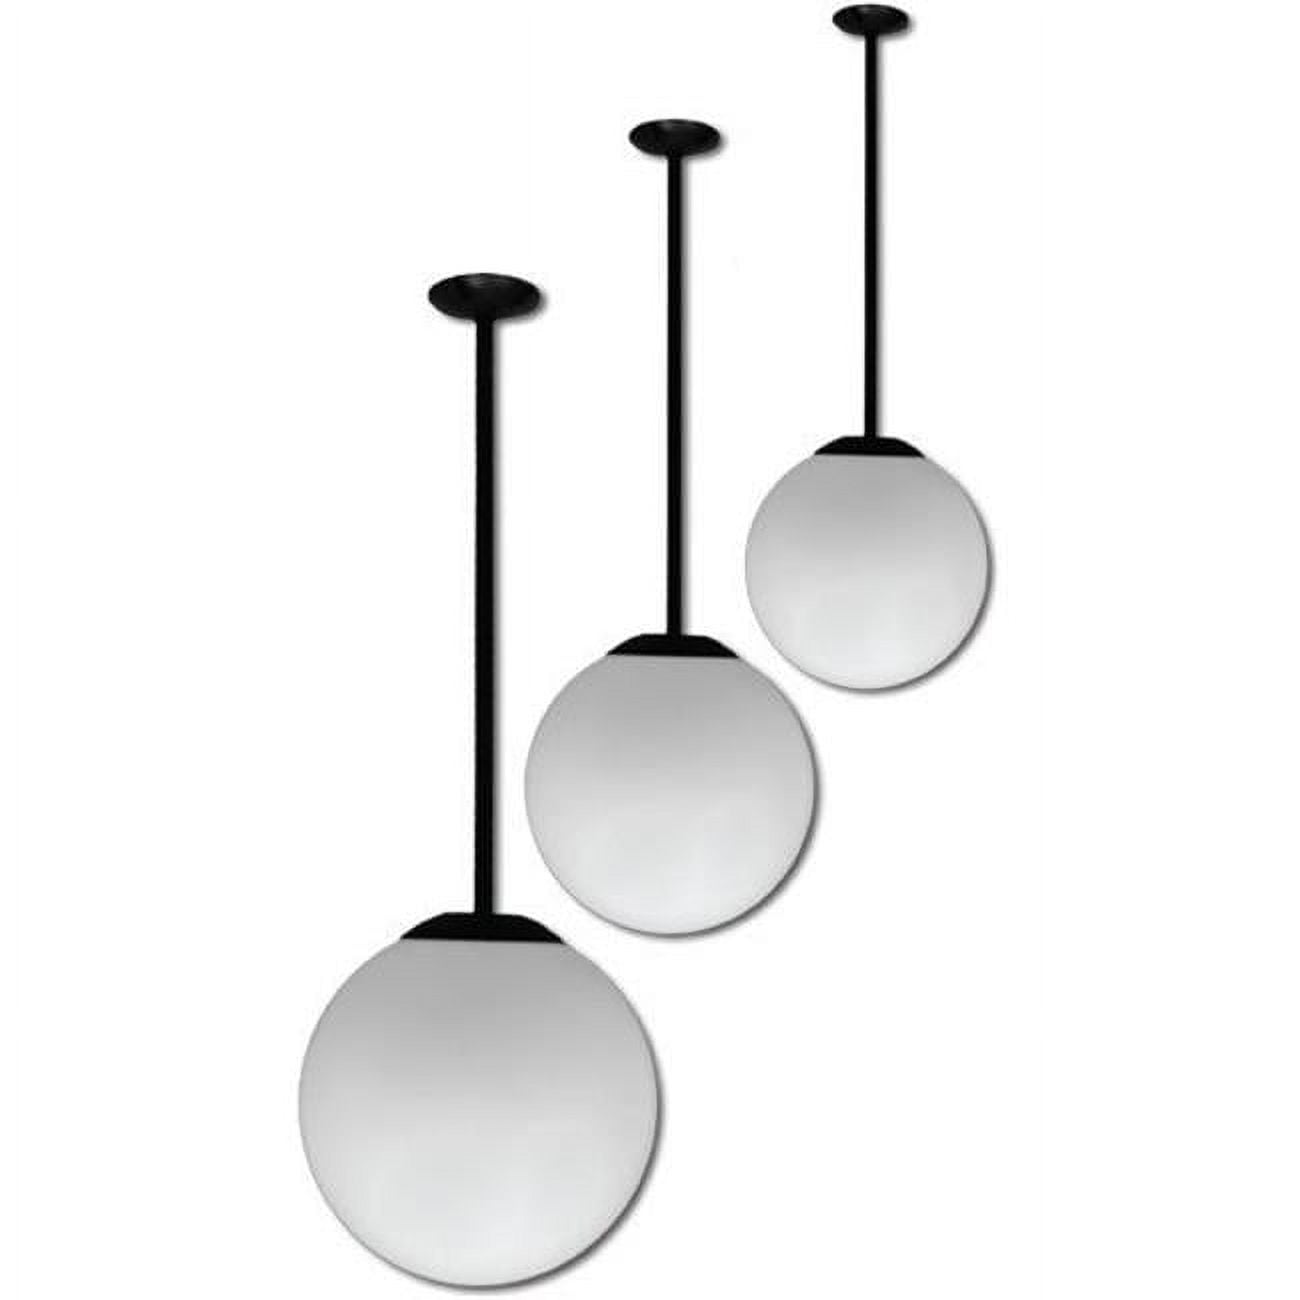 D7516-24-b 18 In. 120 V 50 Watts Ceiling Globe Fixture 24 In. Drop With Metal Halide Lamp, Black